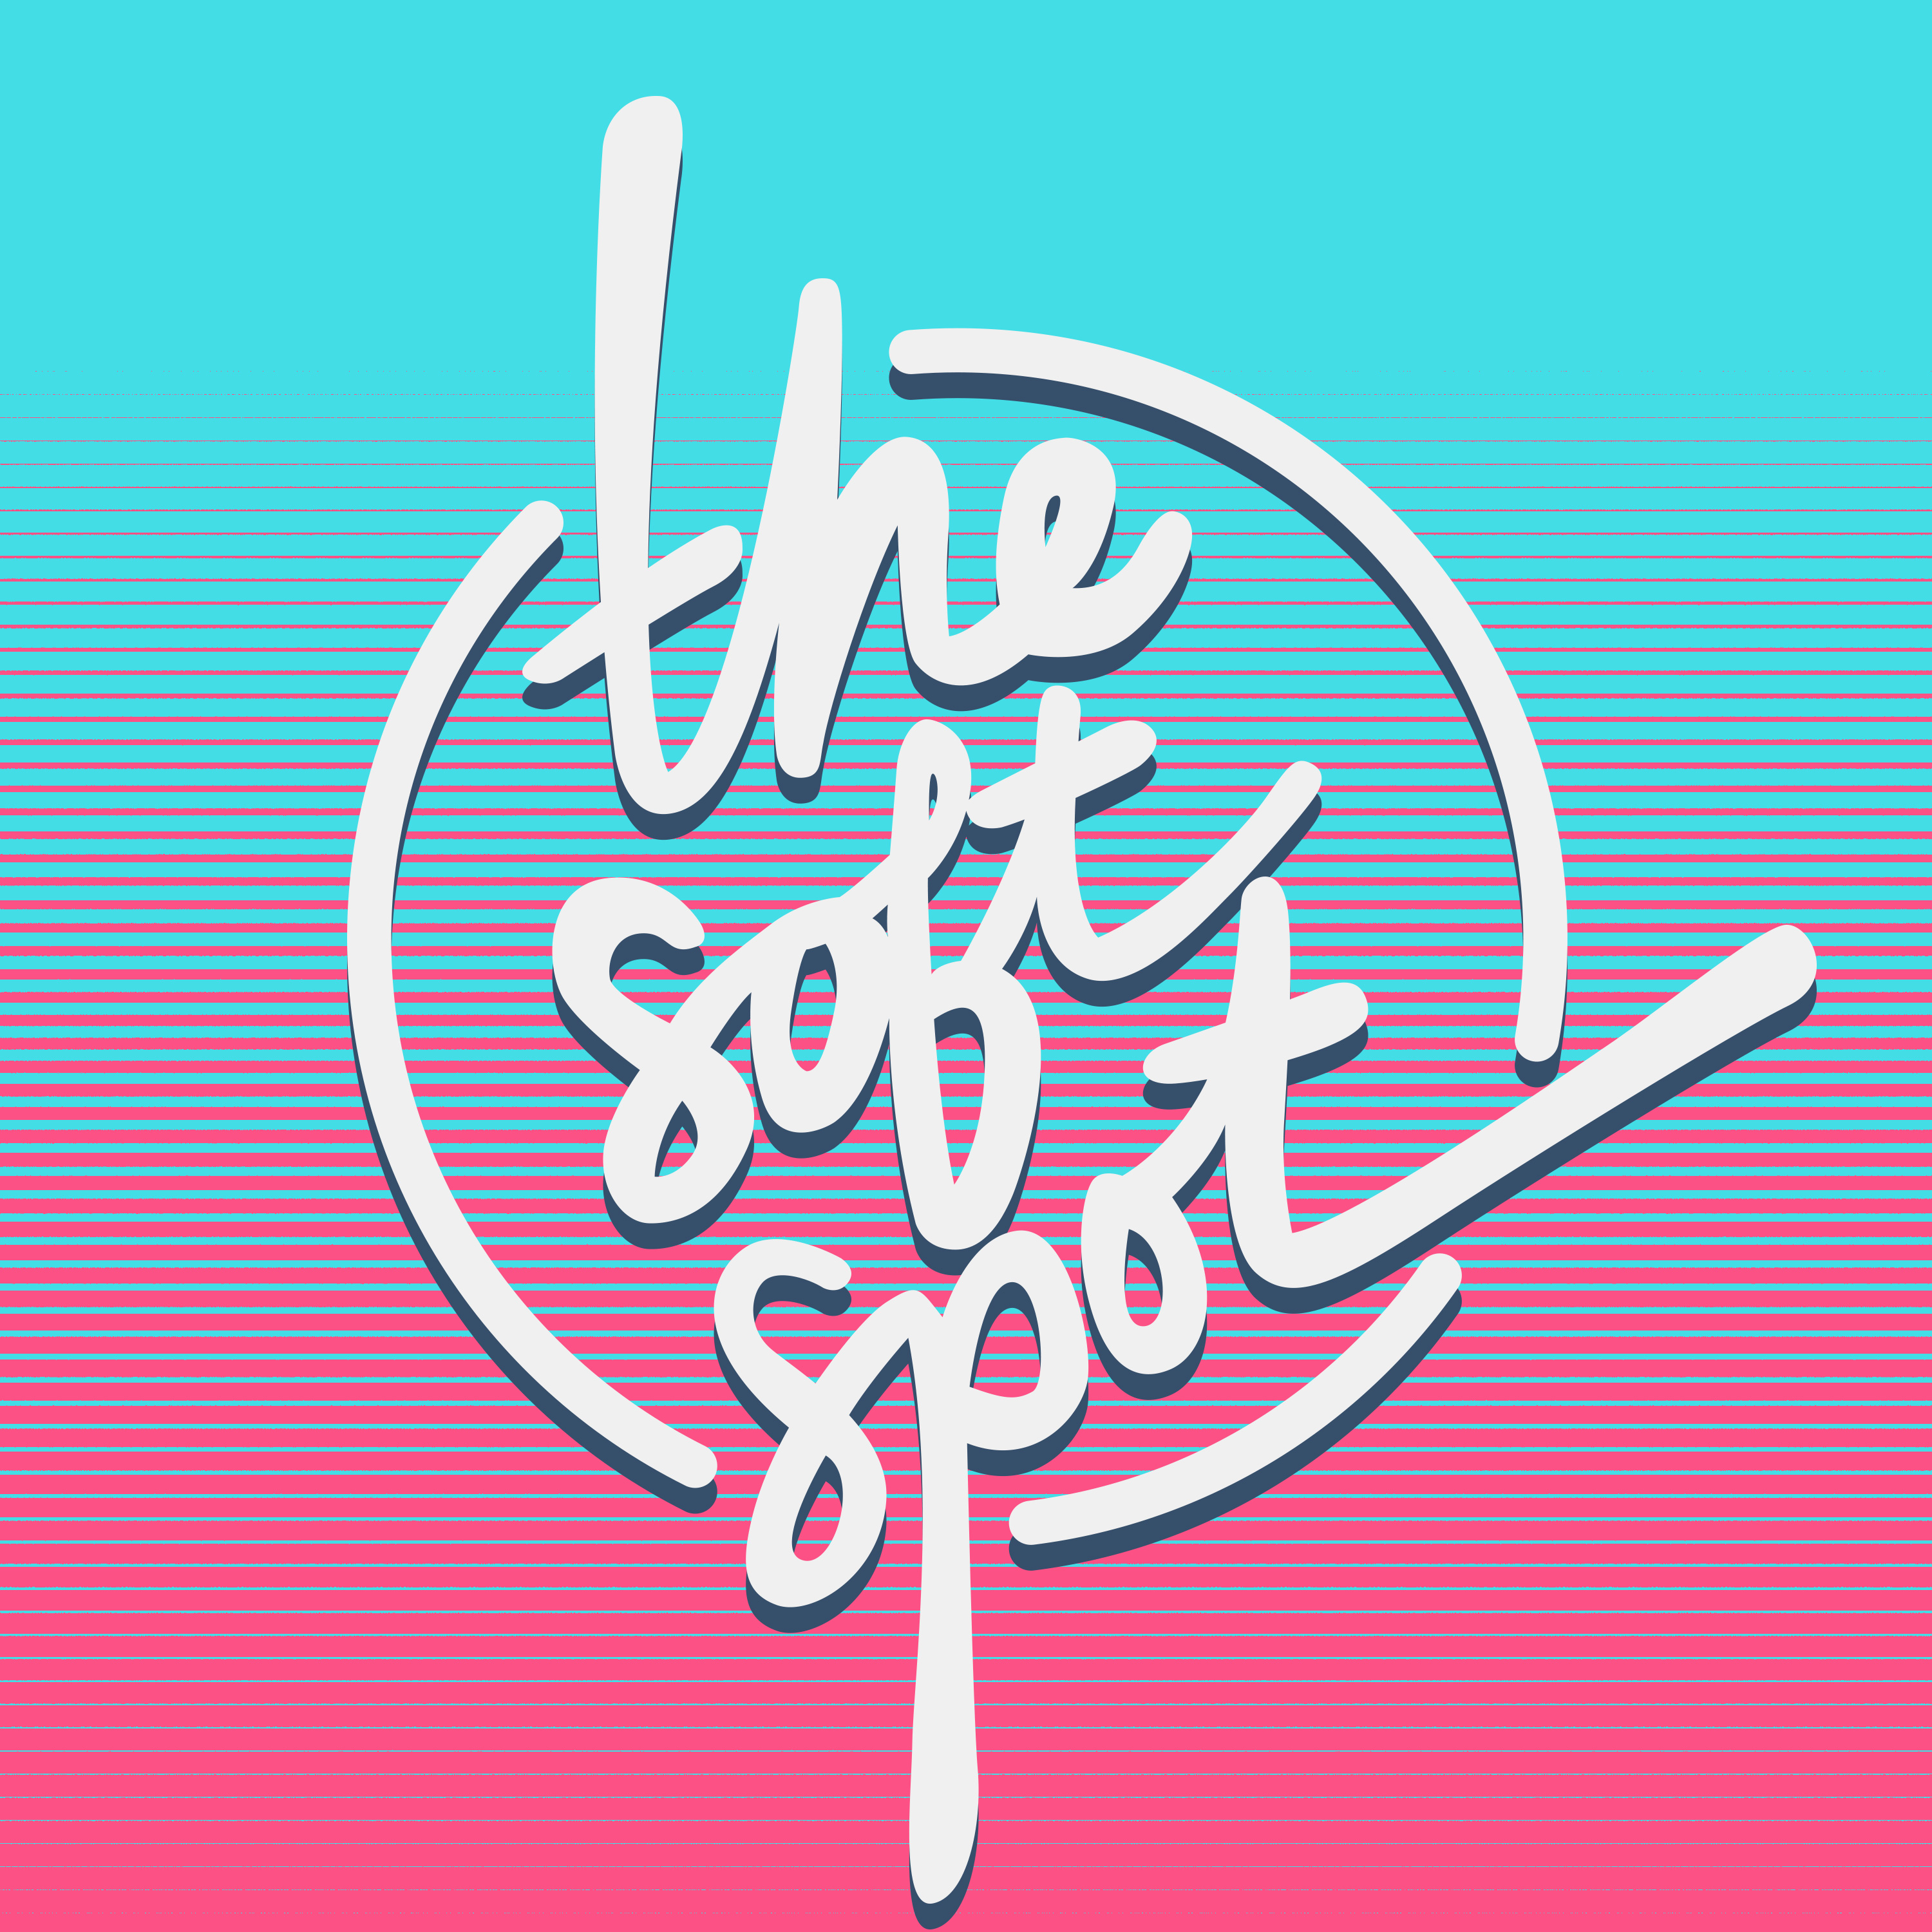 The Soft Spot